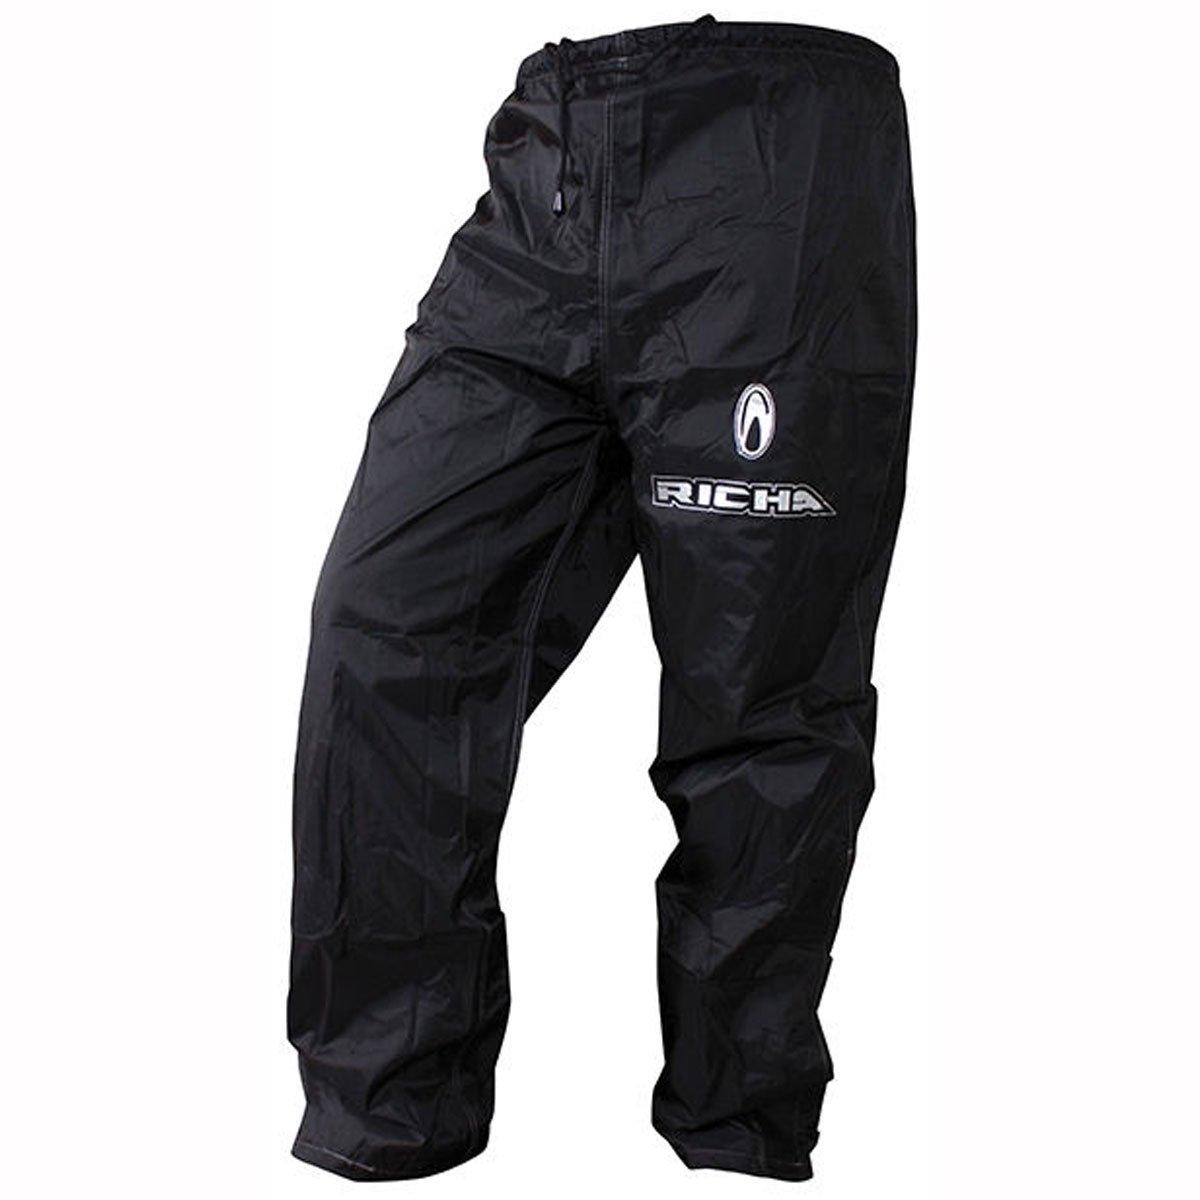 Richa Rain Warrior Waterproof Overtrousers: 'Best buy' rain trousers that do not break the bank